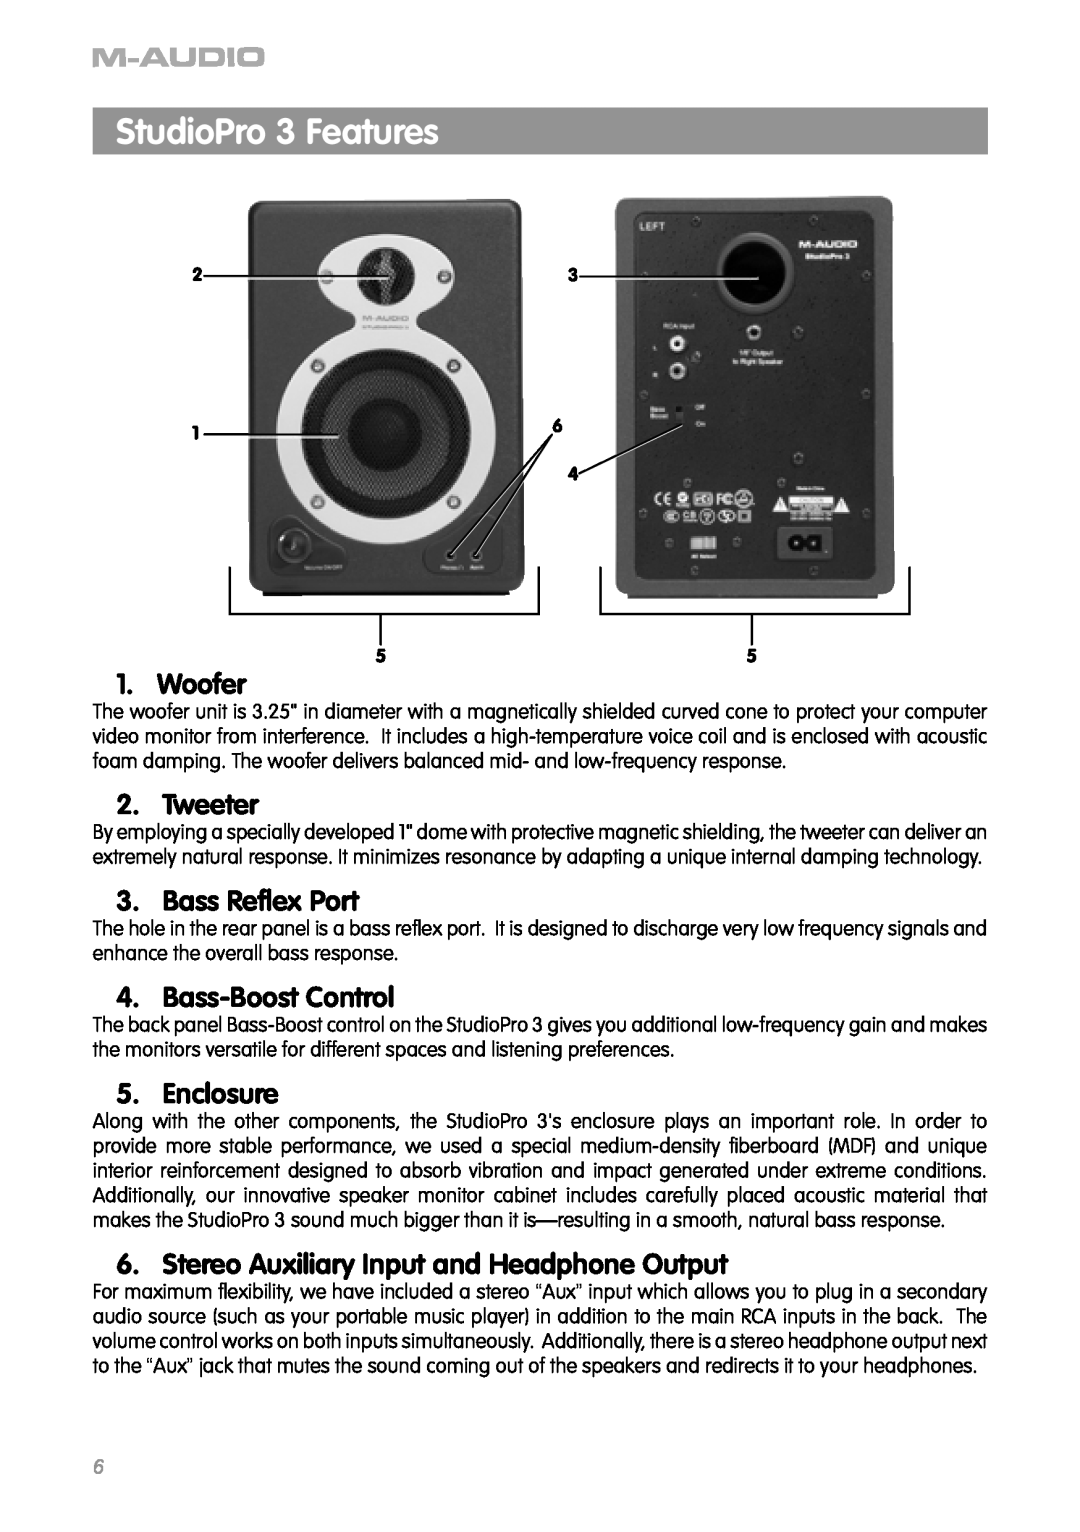 M-Audio manual StudioPro 3 Features, Woofer, Tweeter, Bass Reﬂex Port, Bass-BoostControl, Enclosure 